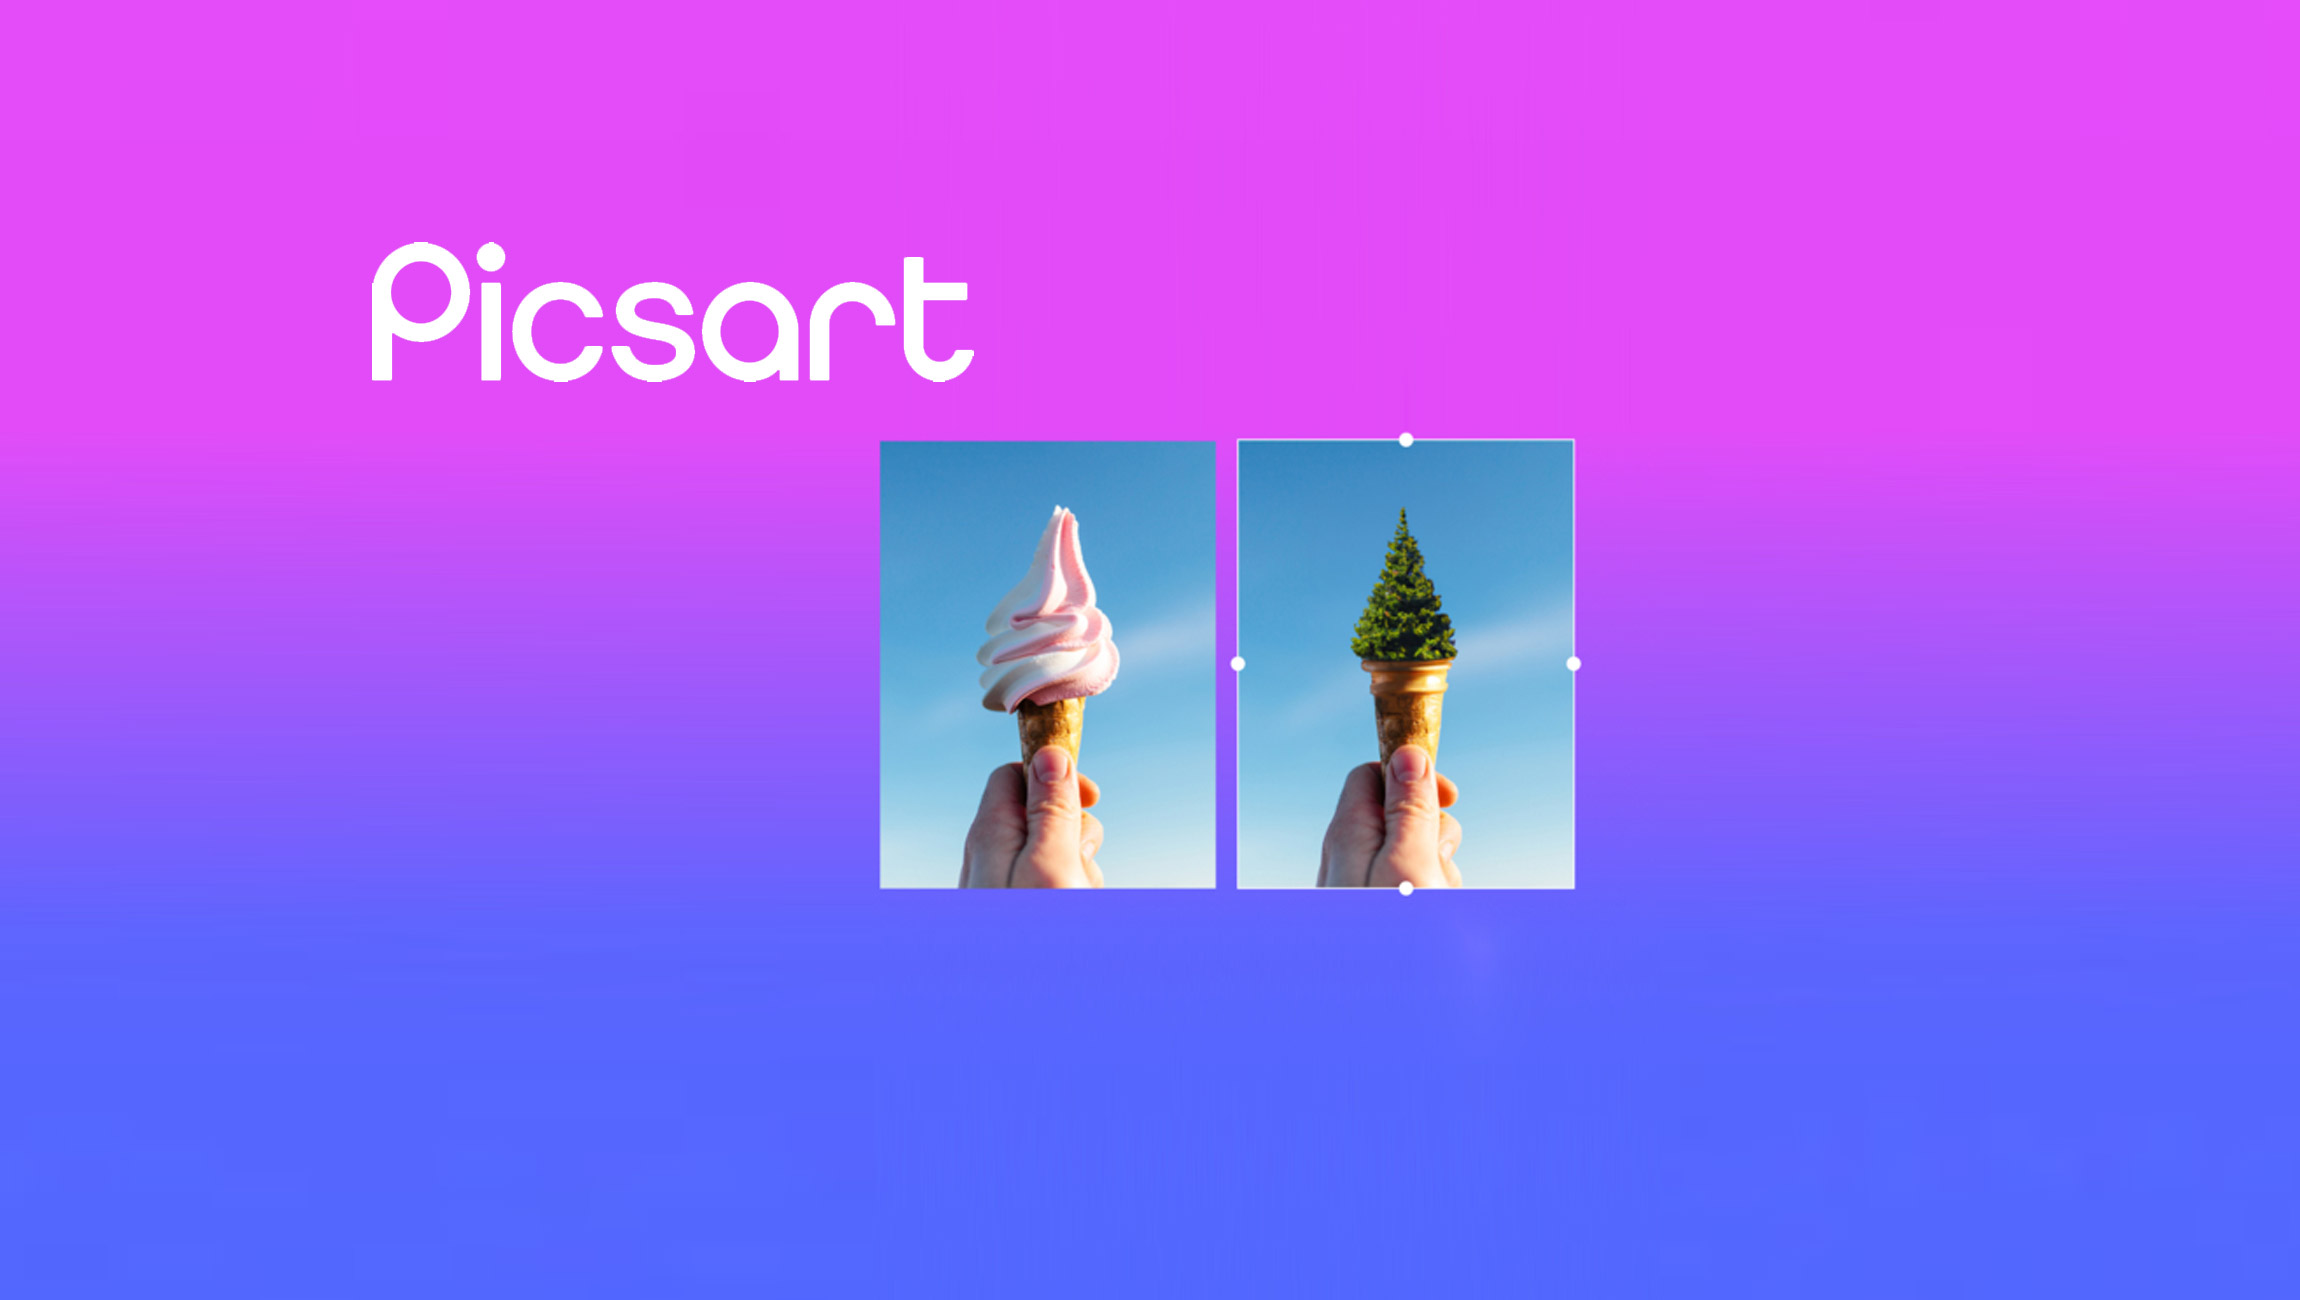 Picsart unveils AI animated GIF generator